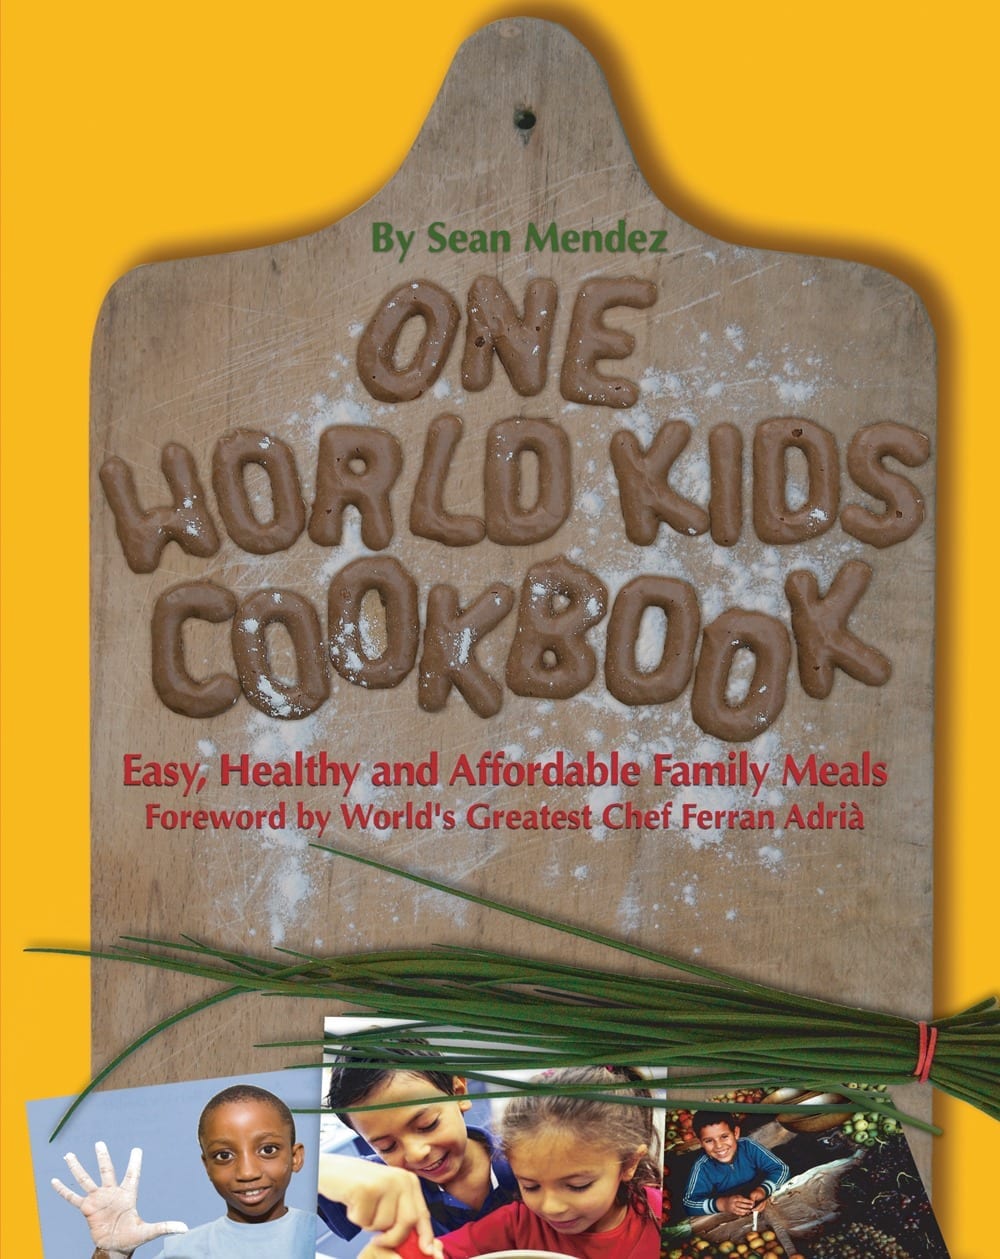 One World Kids Cookbook